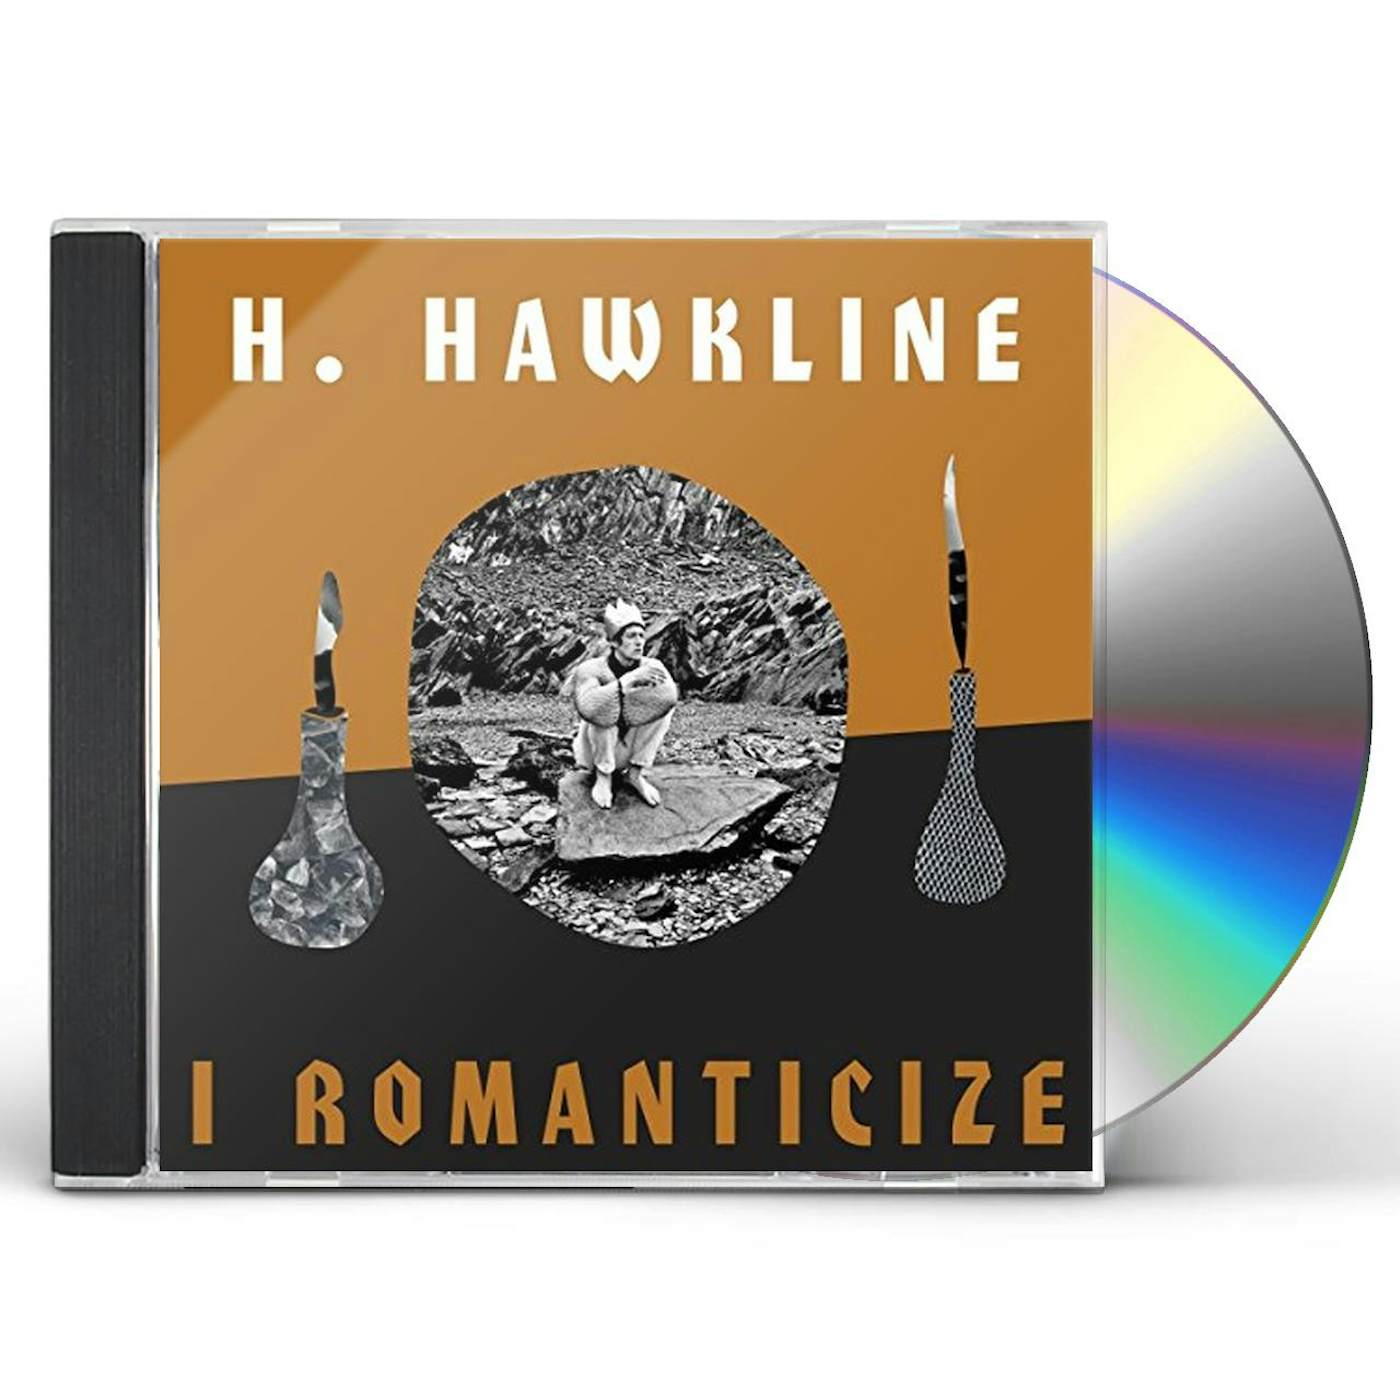 H. Hawkline I ROMANTICIZE CD